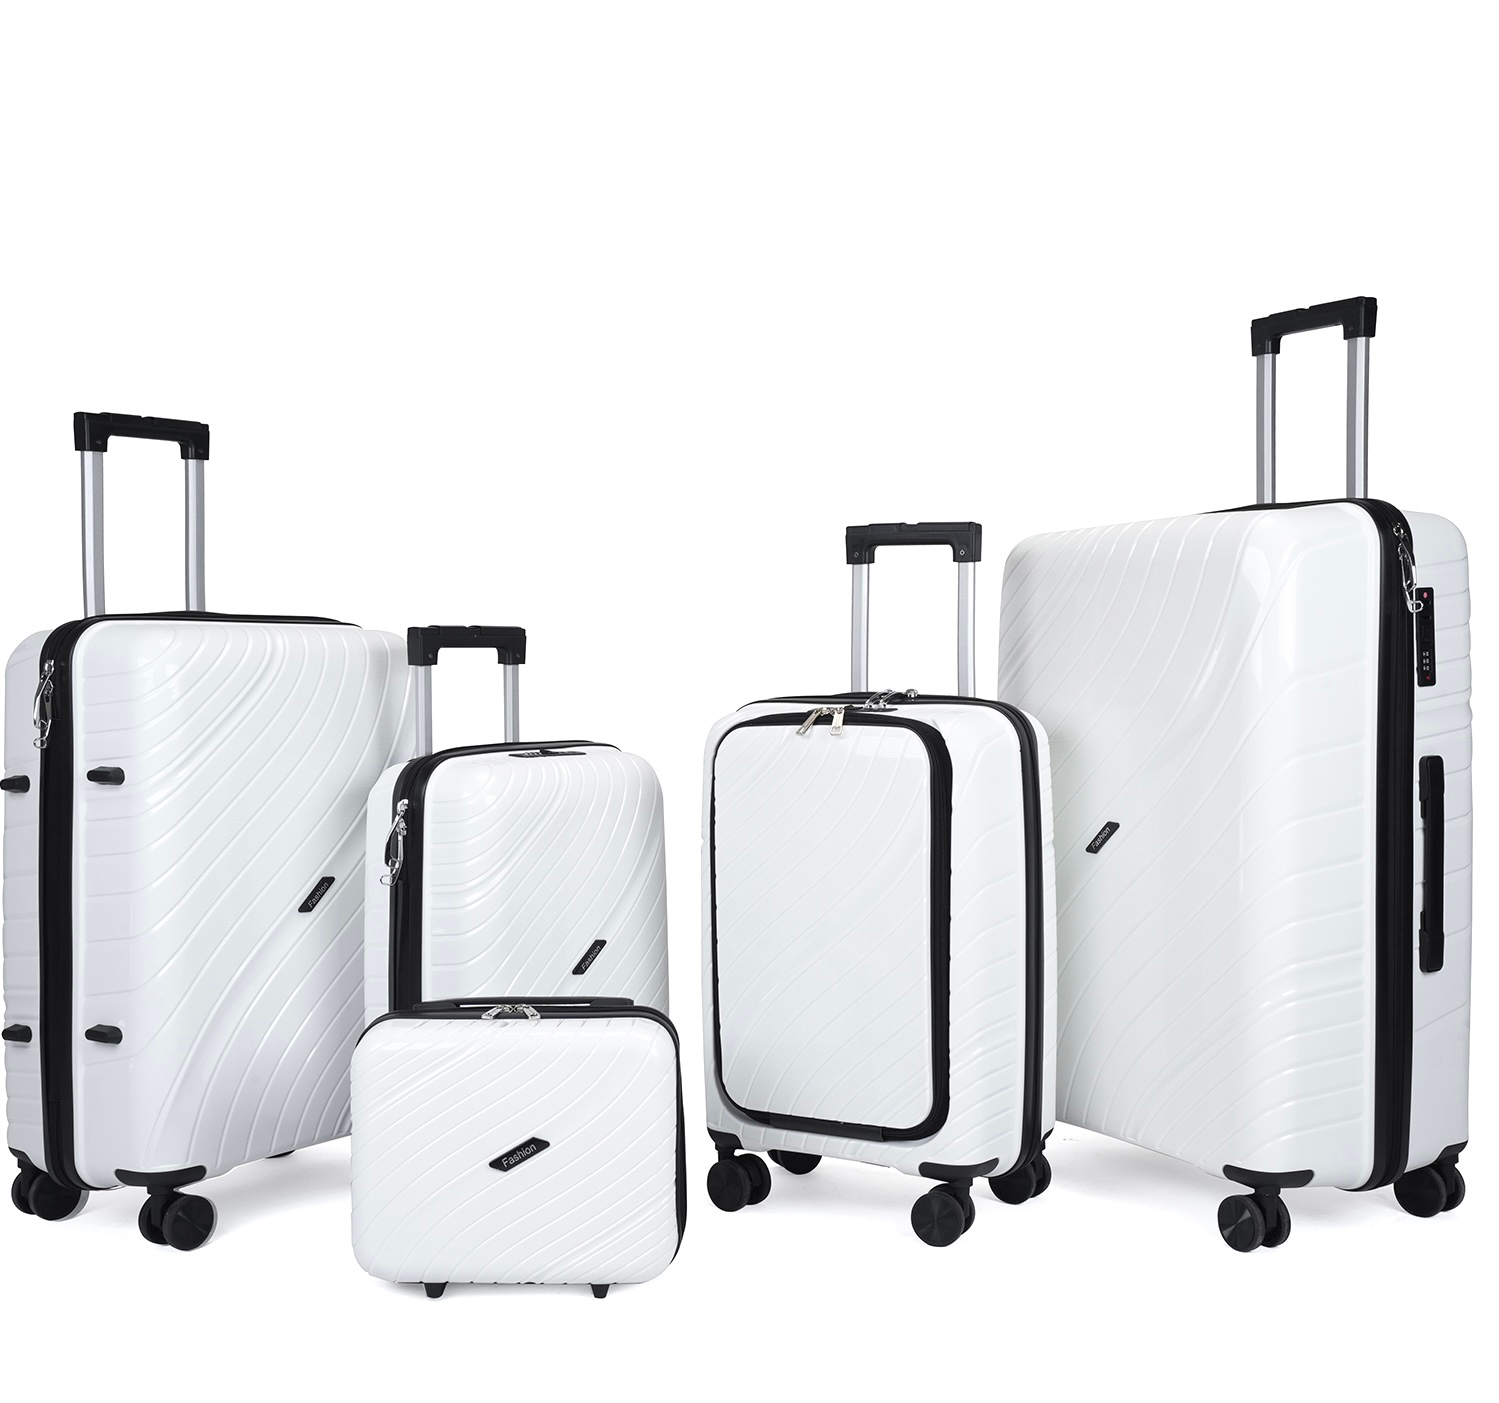 Marksman New Style Hot Sale PP Luggage Set High Quality Suitcase Set 